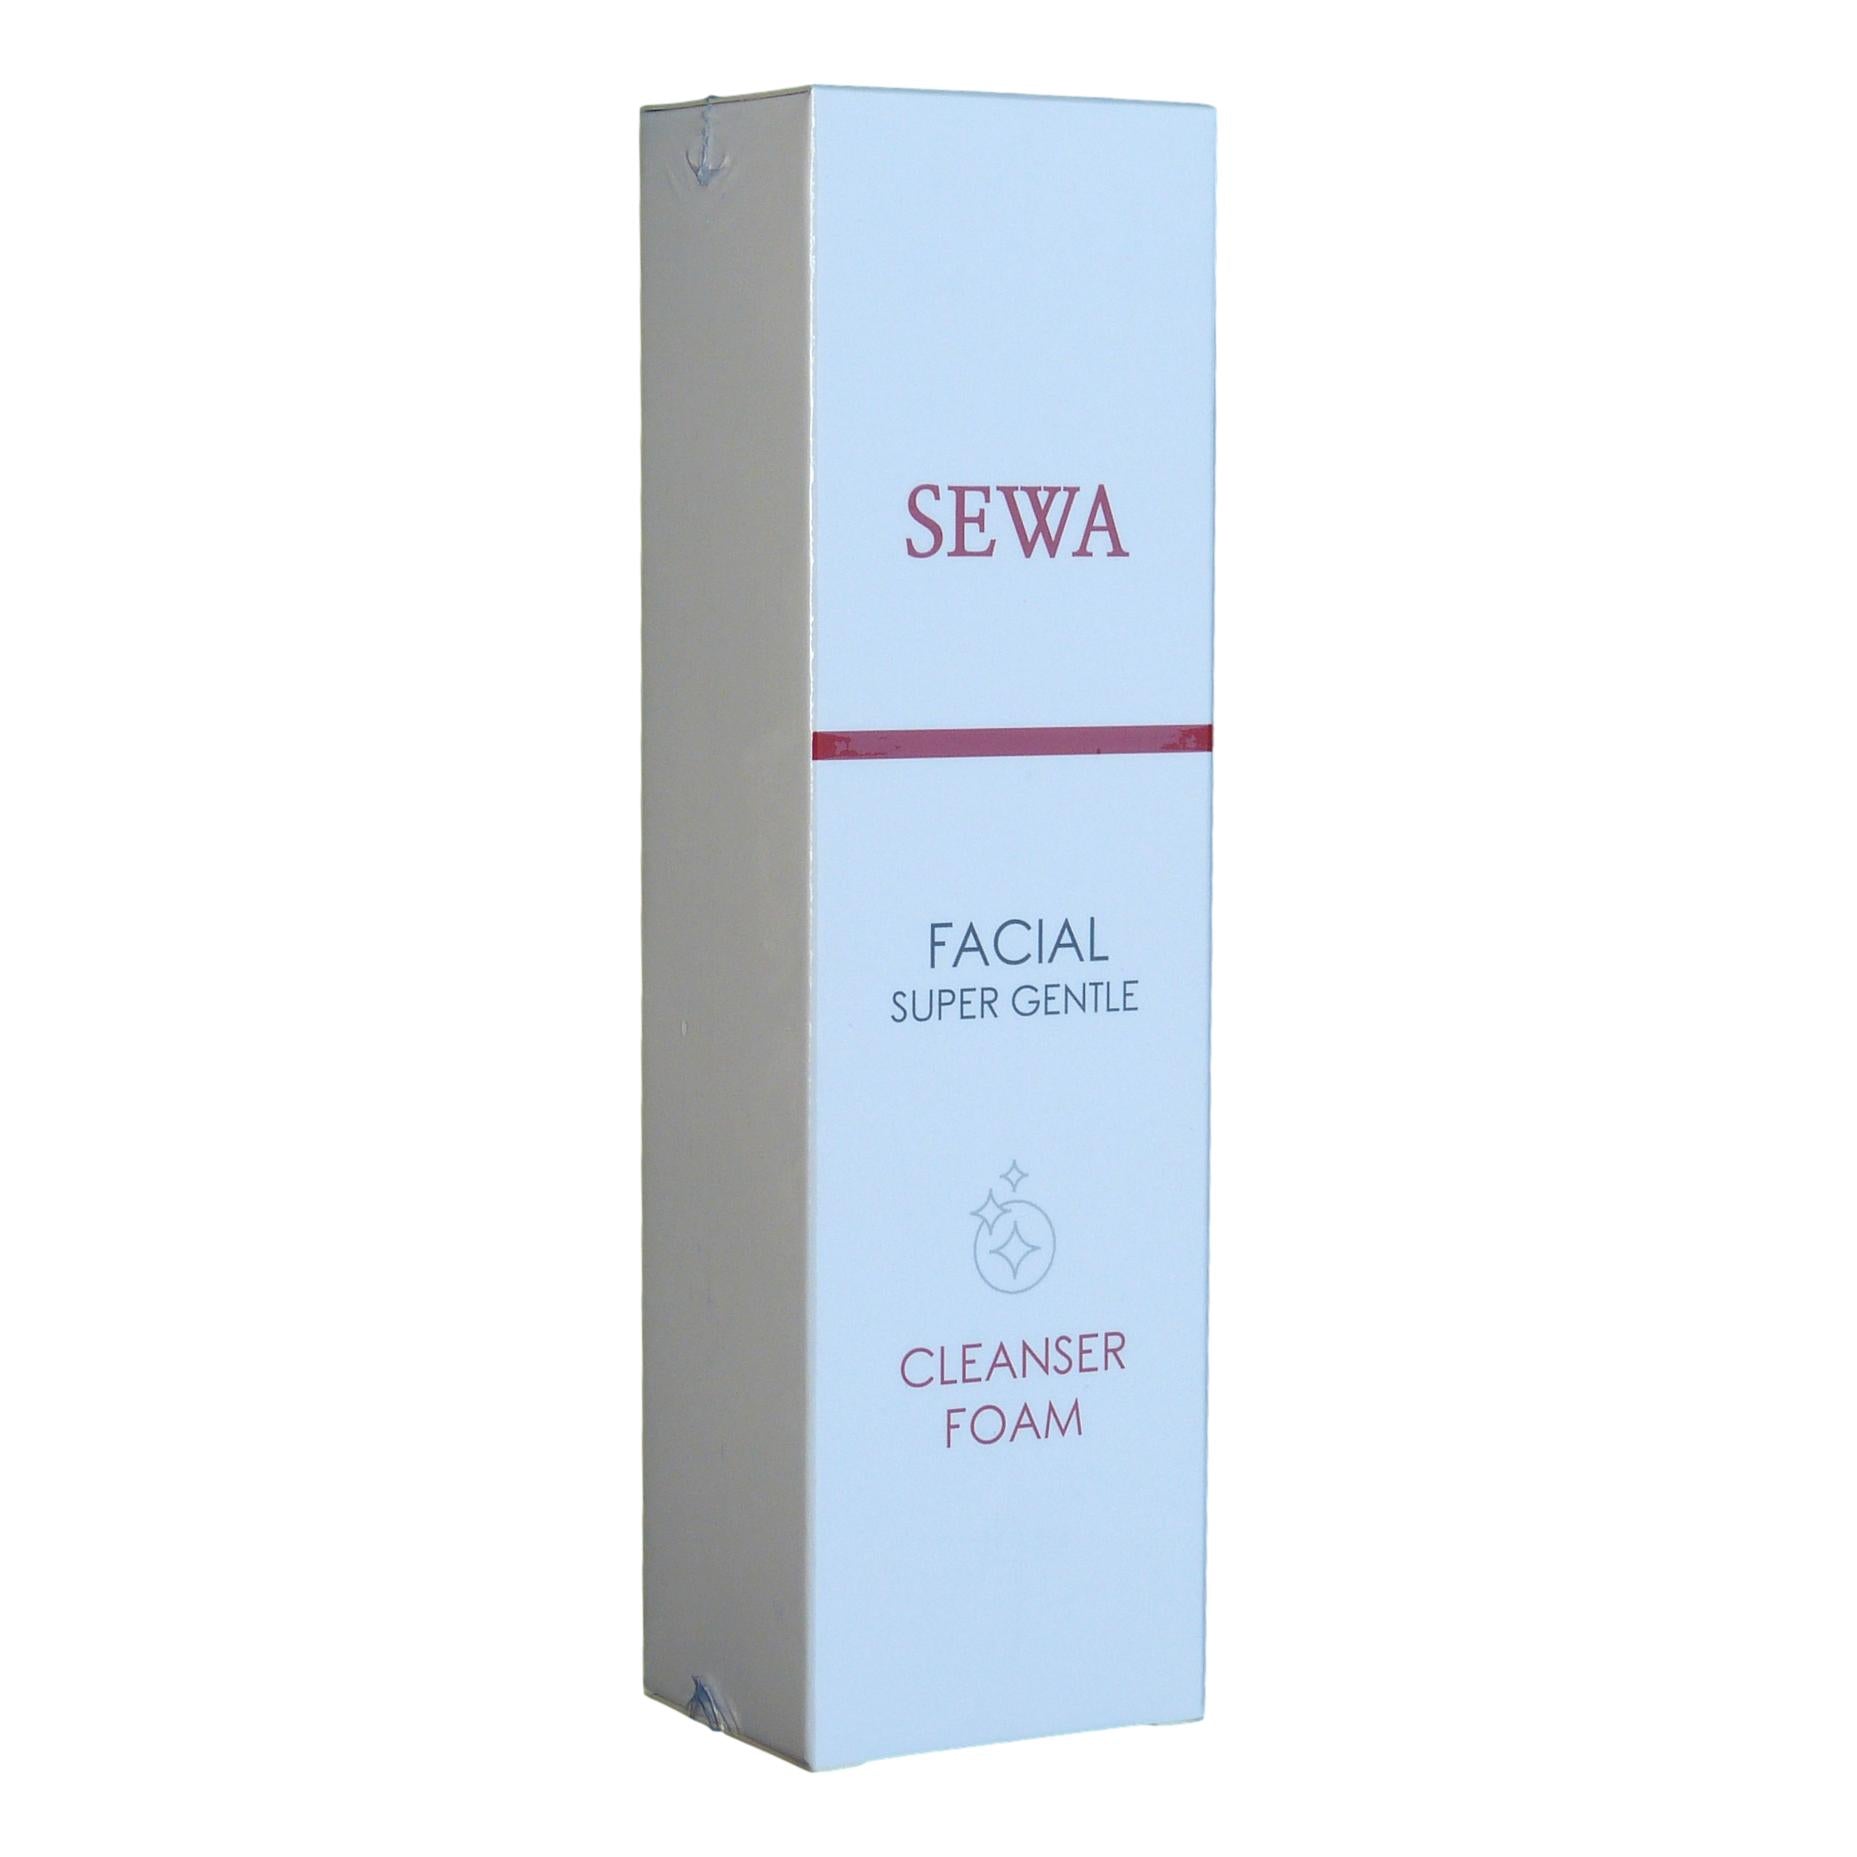 Sewa Facial Super Gentle Cleanser Foam 100g - Asian Beauty Supply